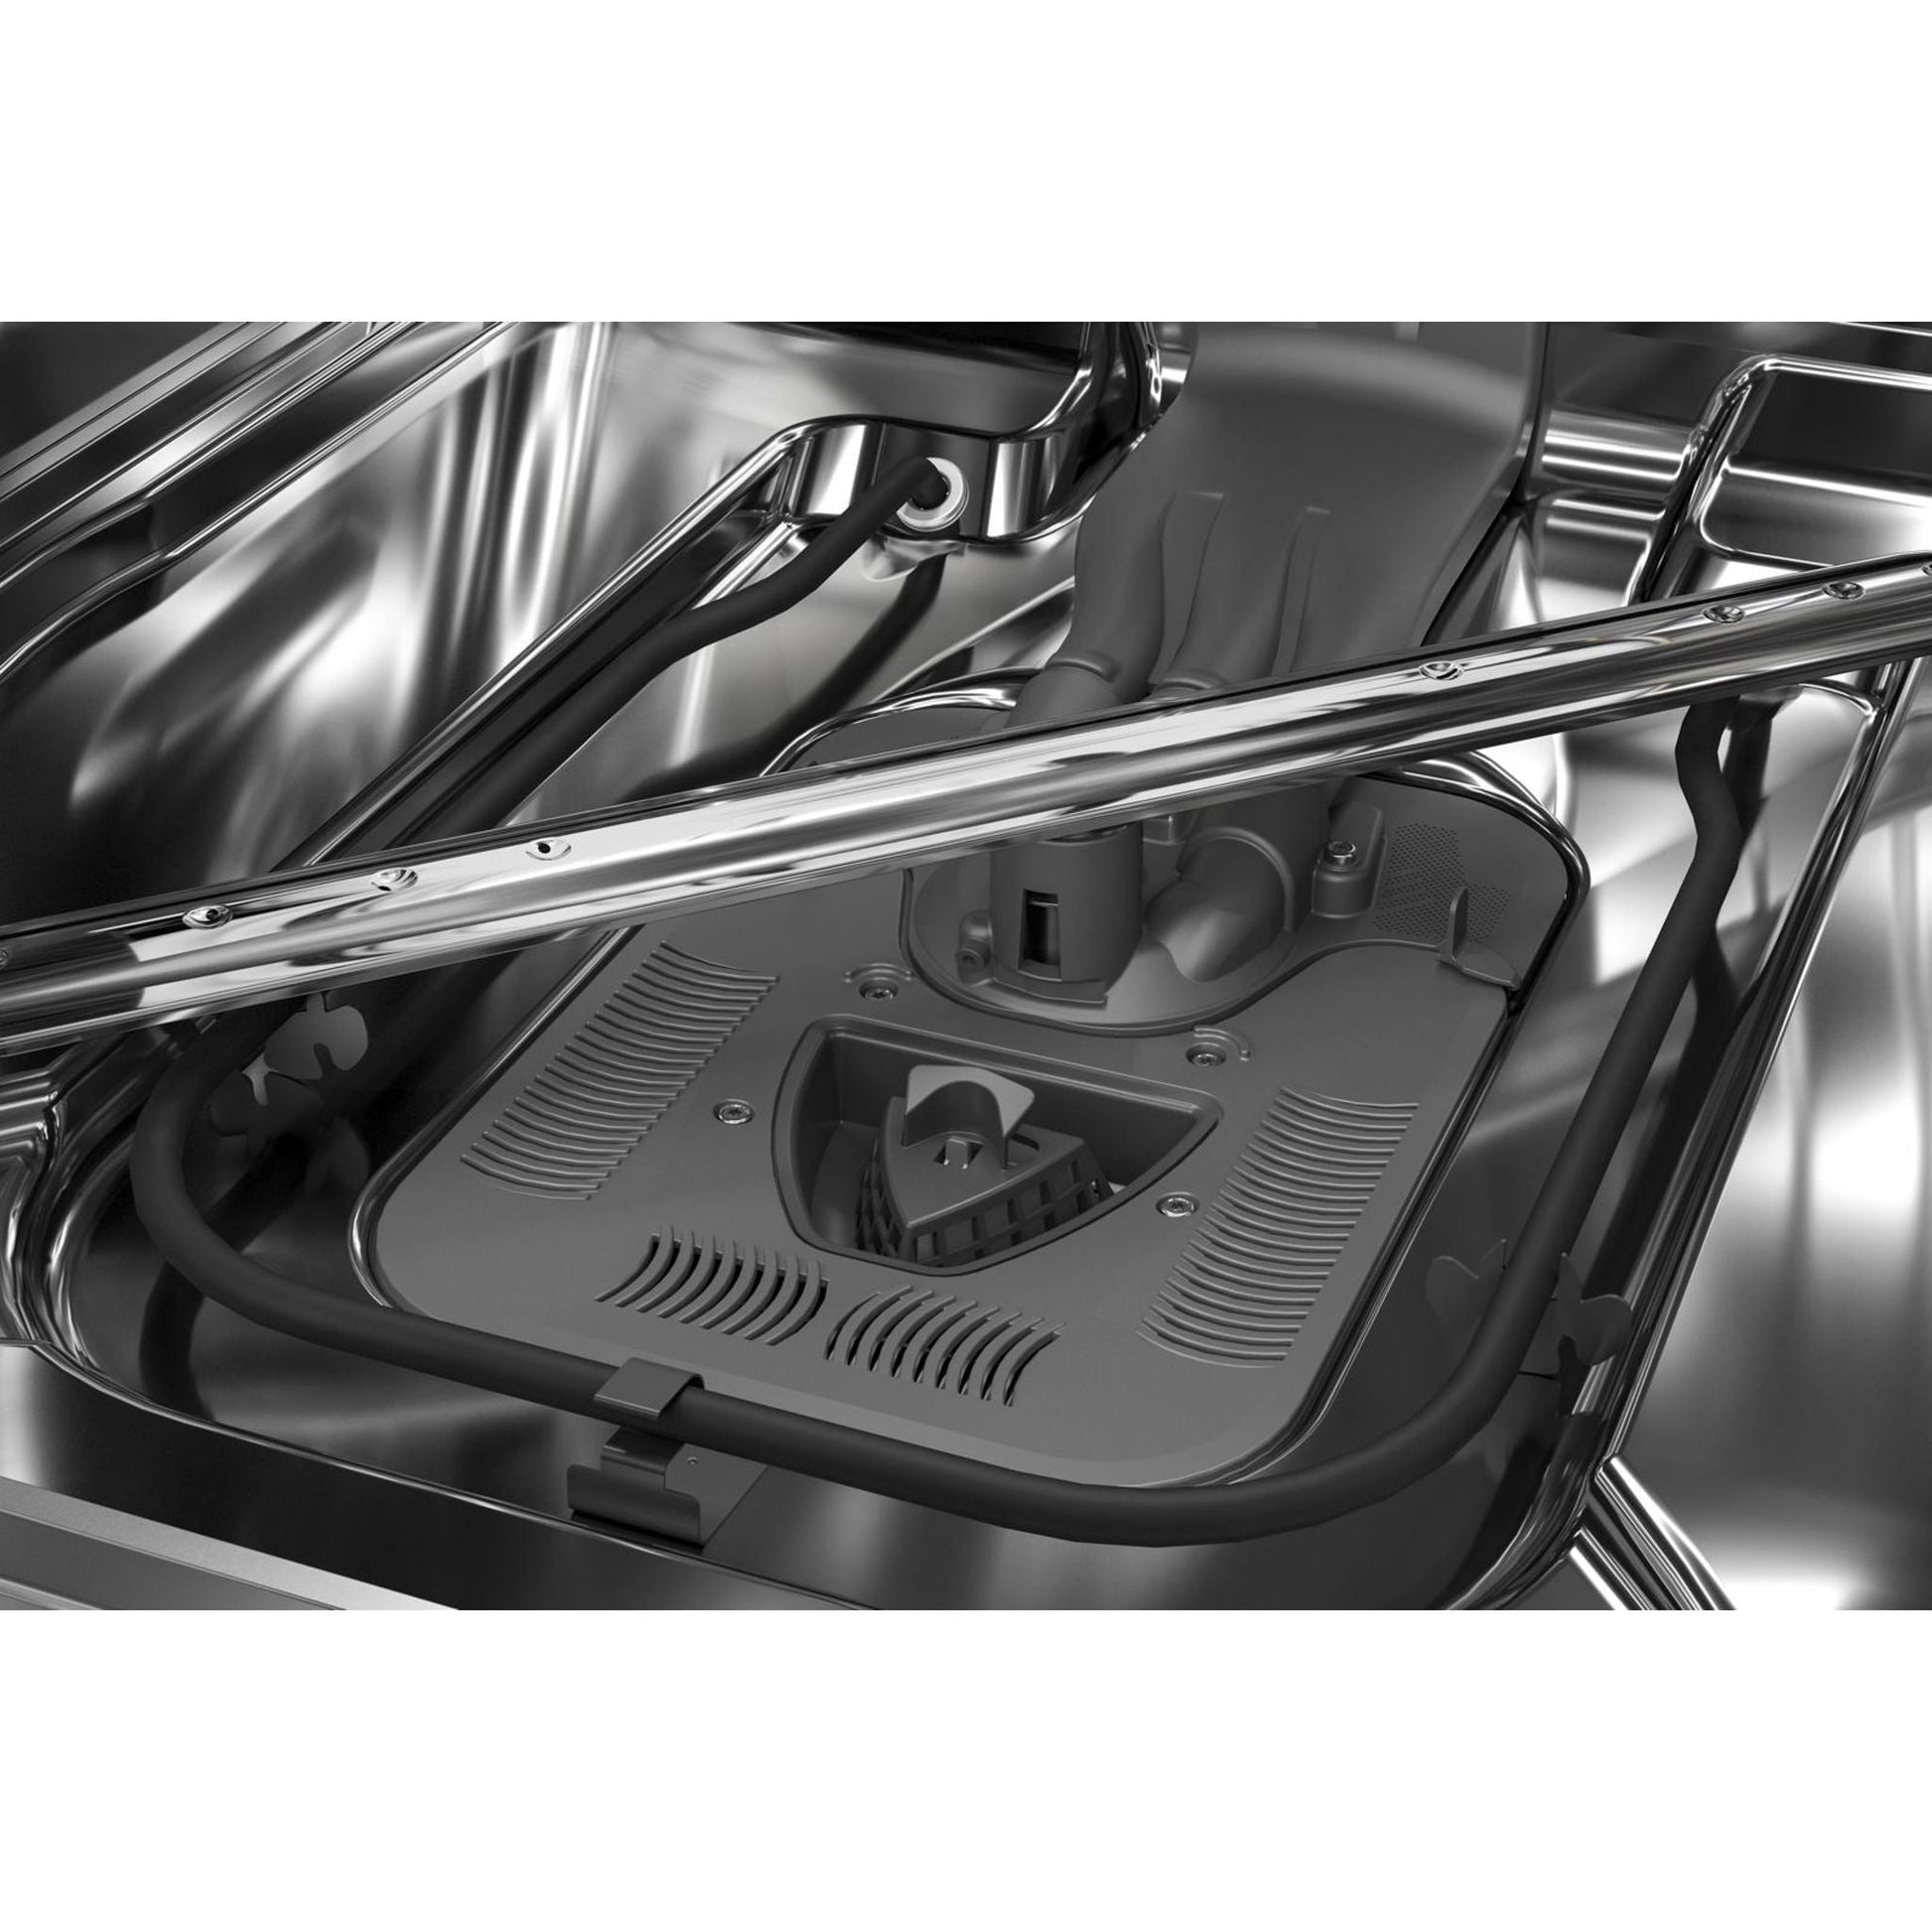 KitchenAid Dishwasher Stainless Steel Tub (KDFM404KPS) - Stainless Steel